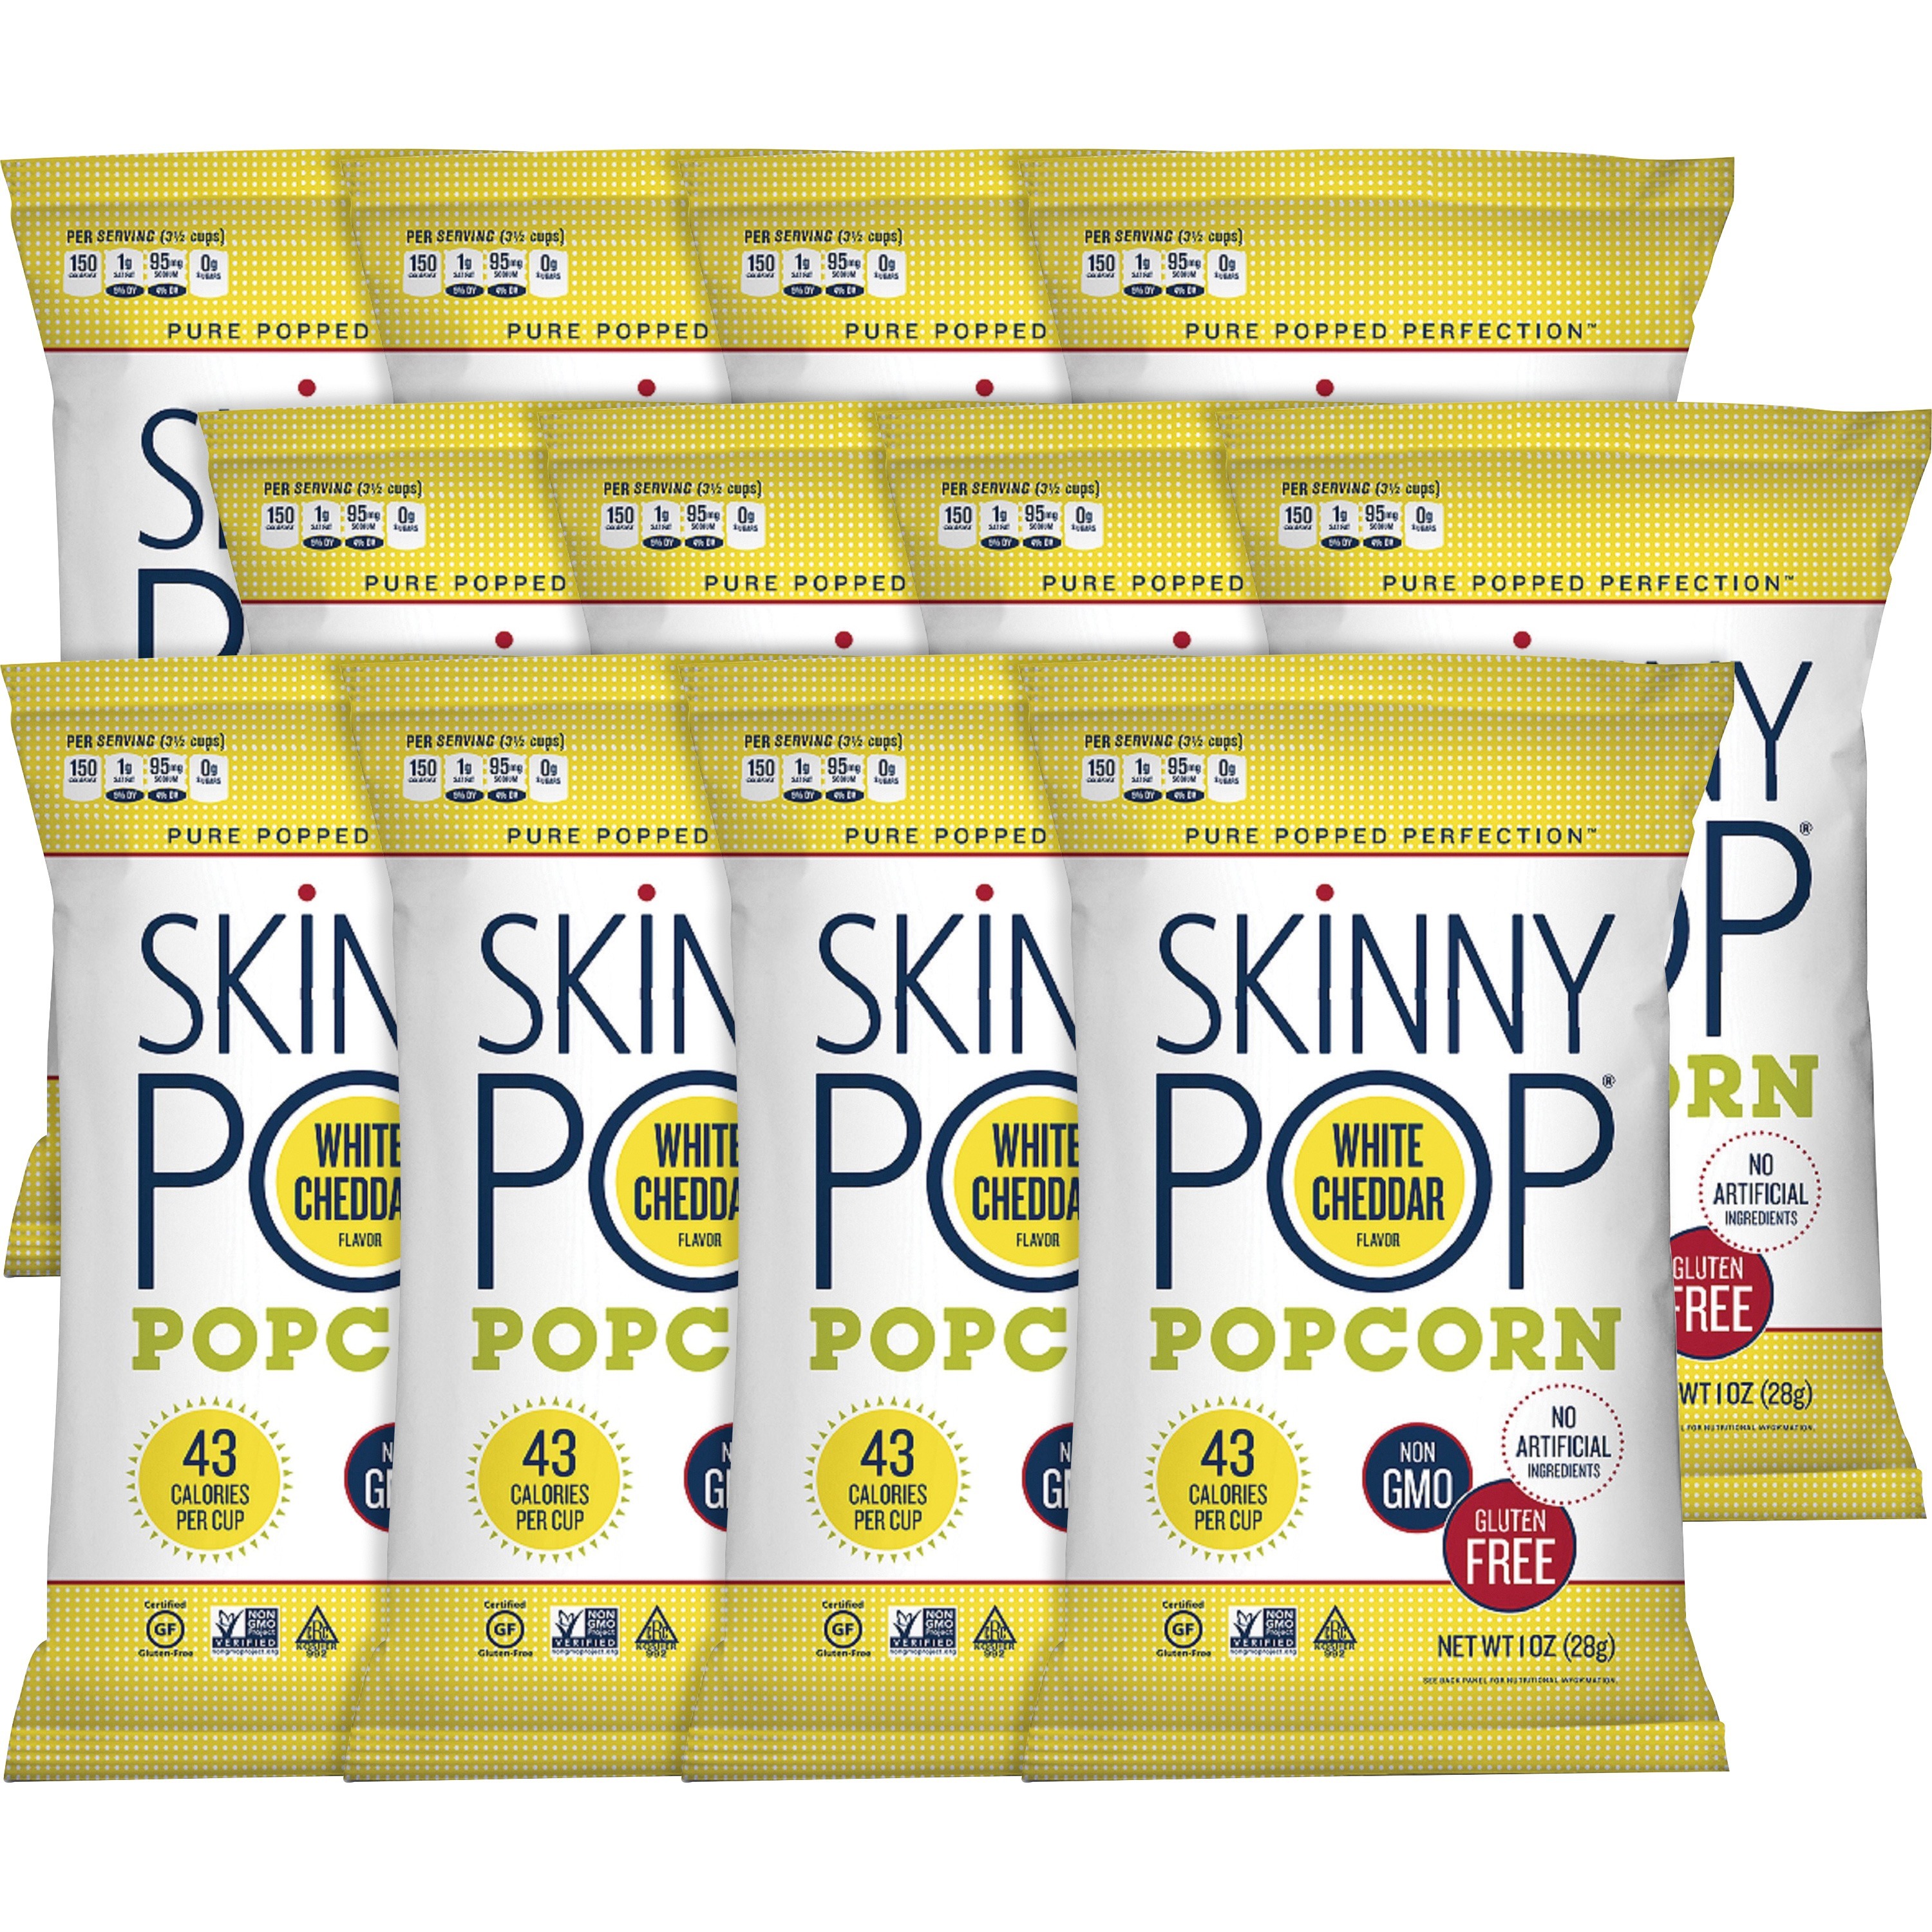 Skinny Pop Organic Popcorn